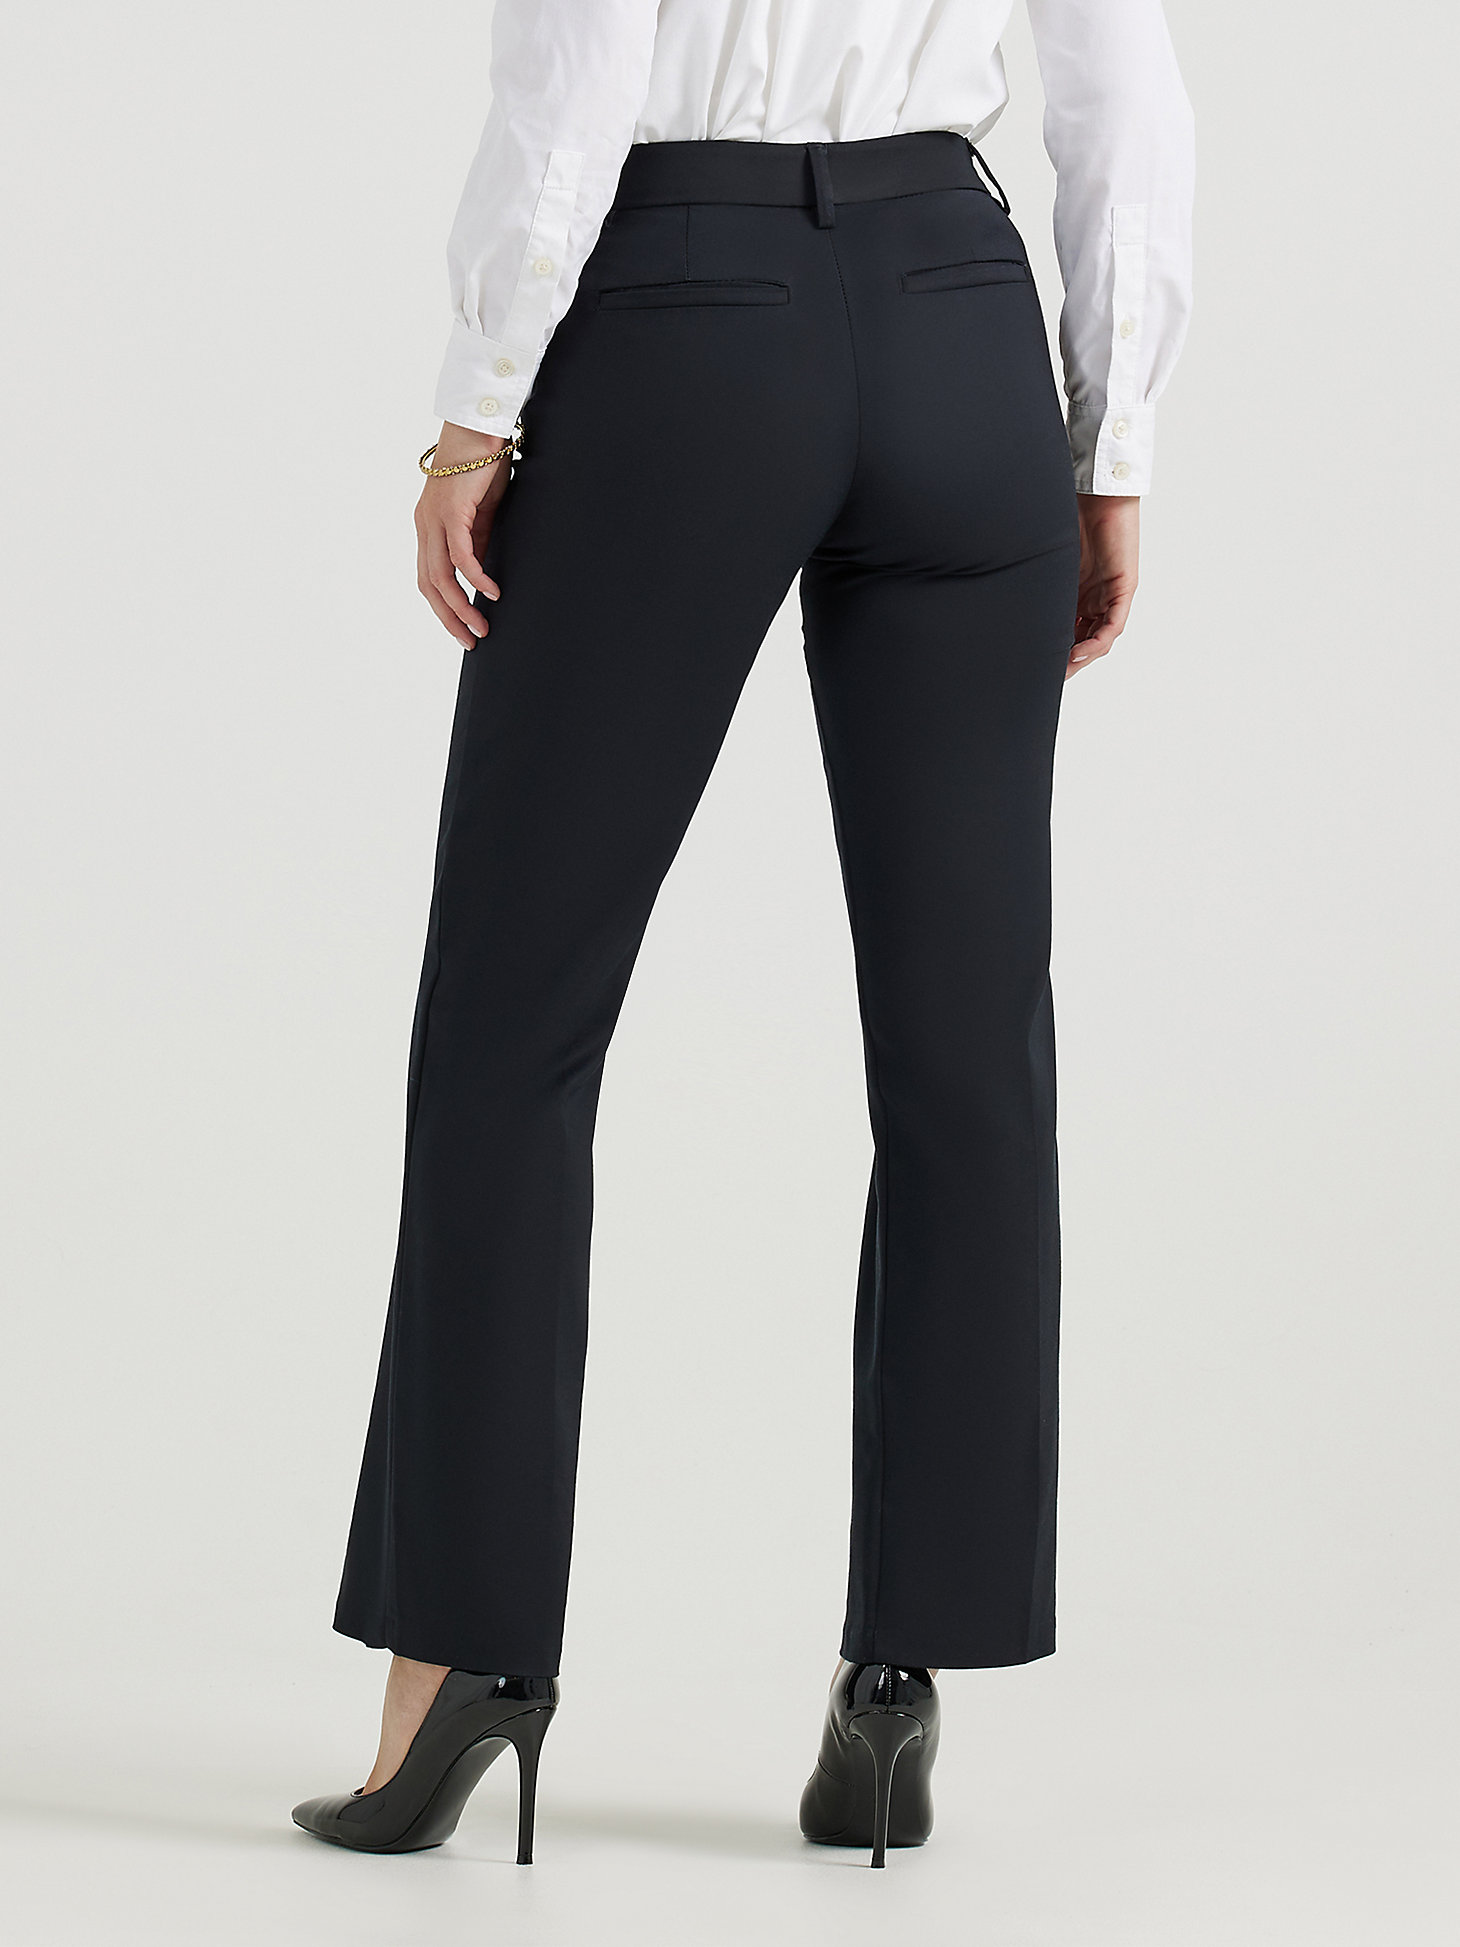 Women’s Flex Motion Regular Fit Trouser Pant in Black alternative view 2